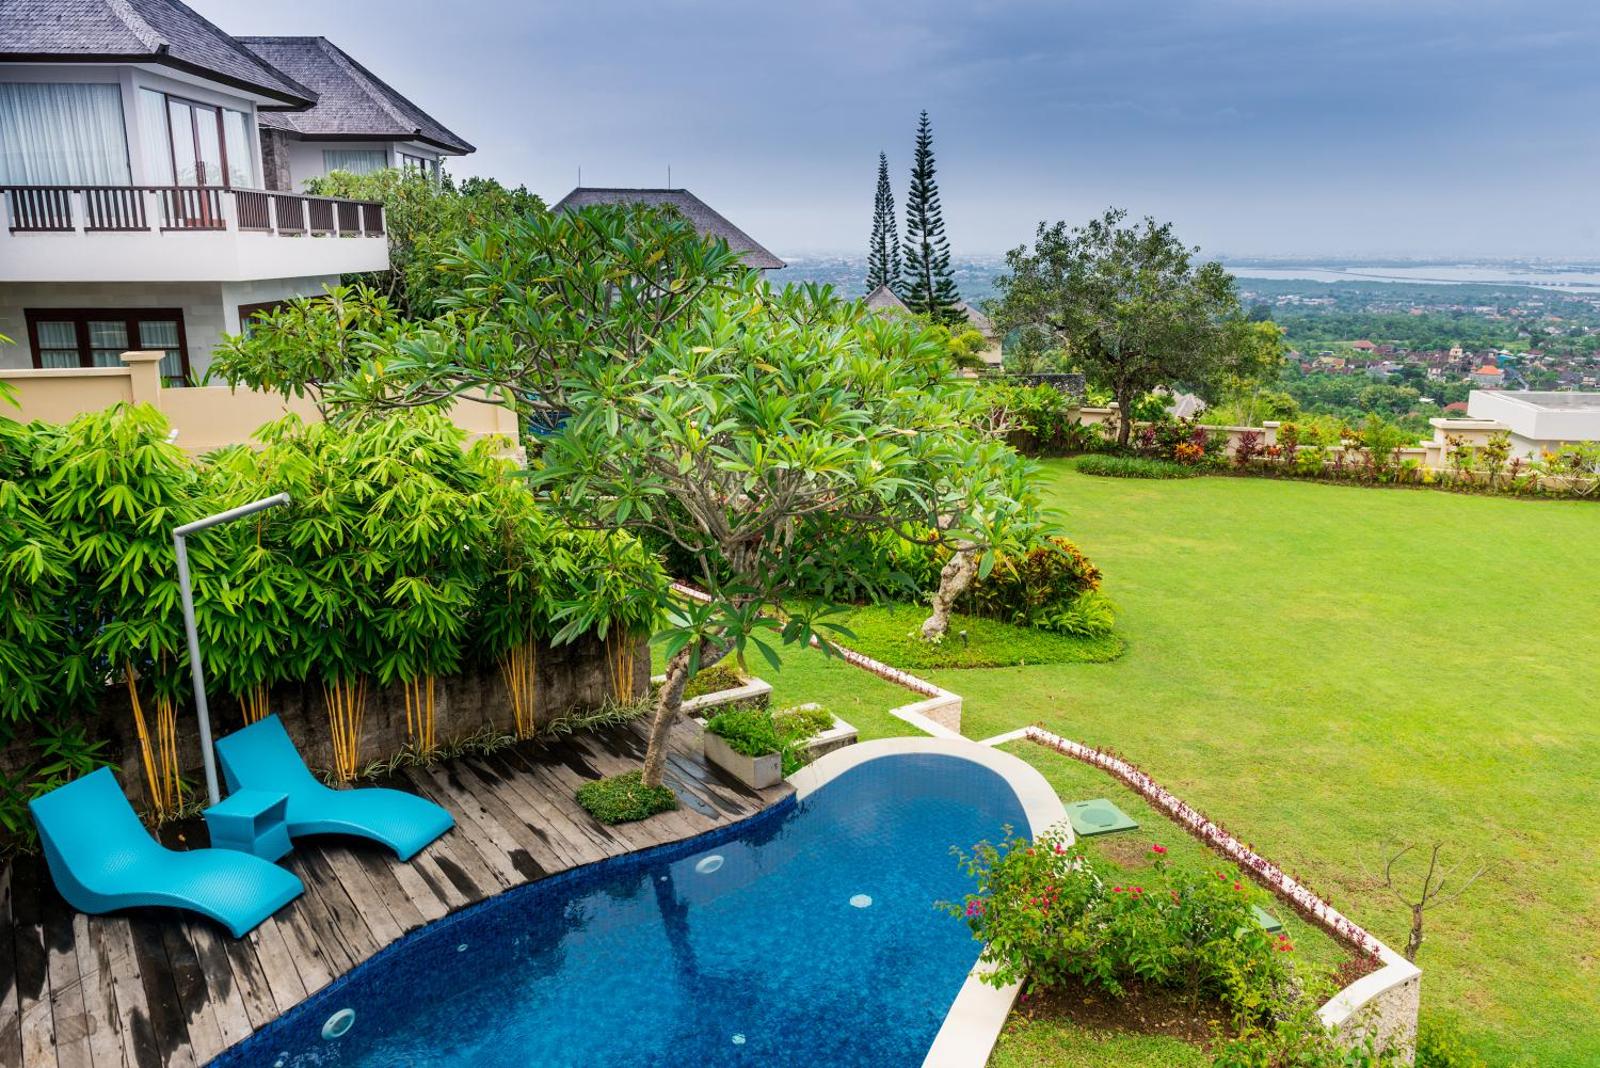 Sun Island Spa Бали. Бали Гоа. Гонг Индонезия Бали. Бали вилла солнце. Island suites